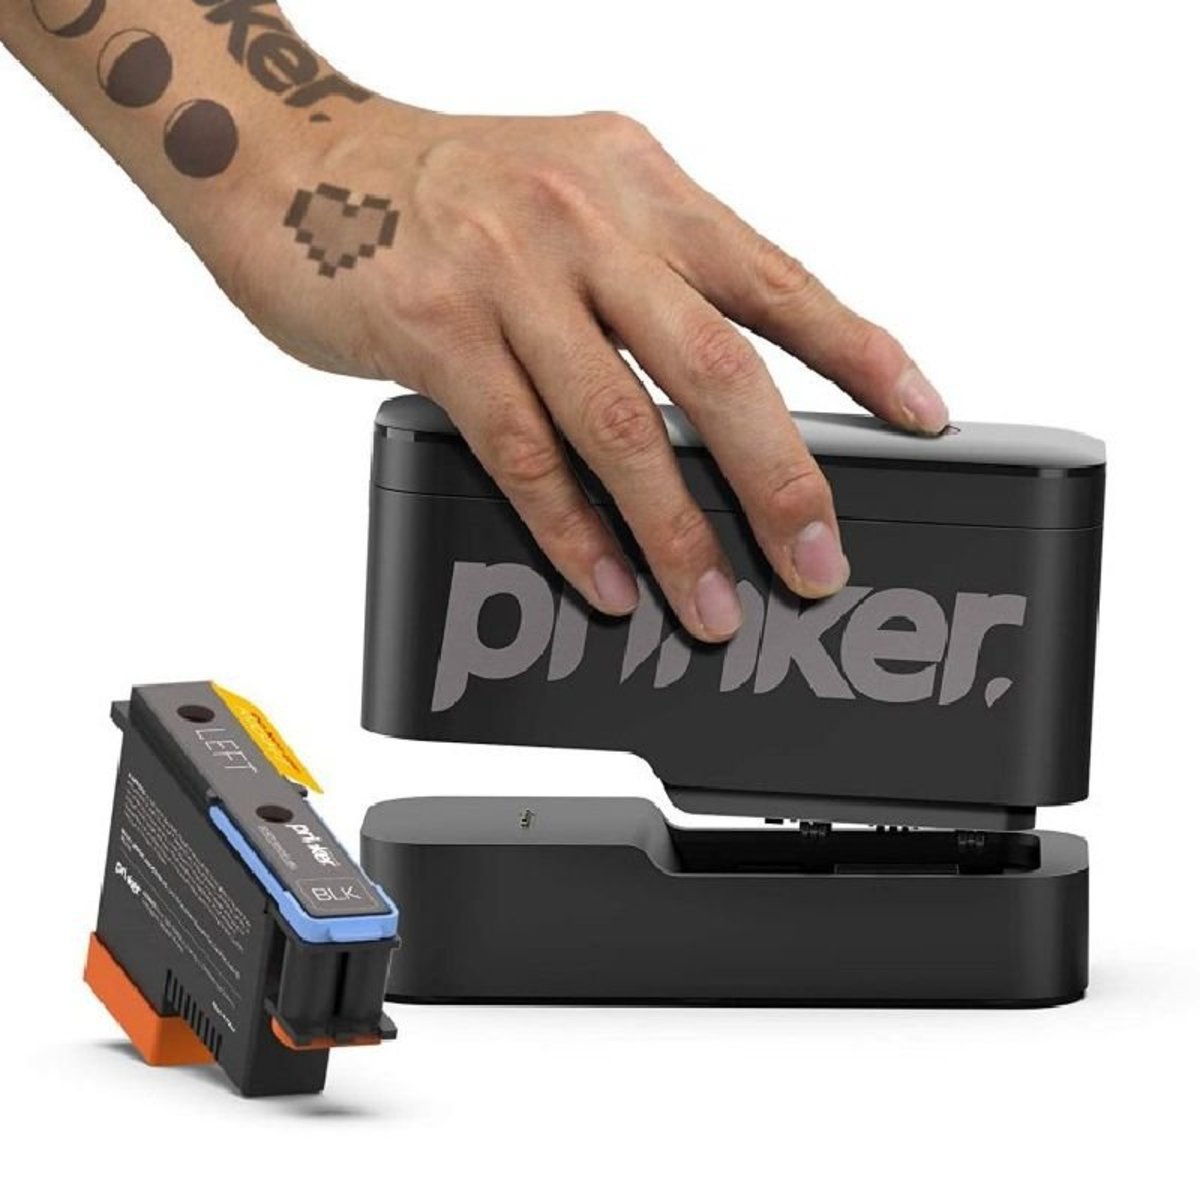 Prinker - South Korea's Prinker S temporary tattoo printer (including black ink and fixative)